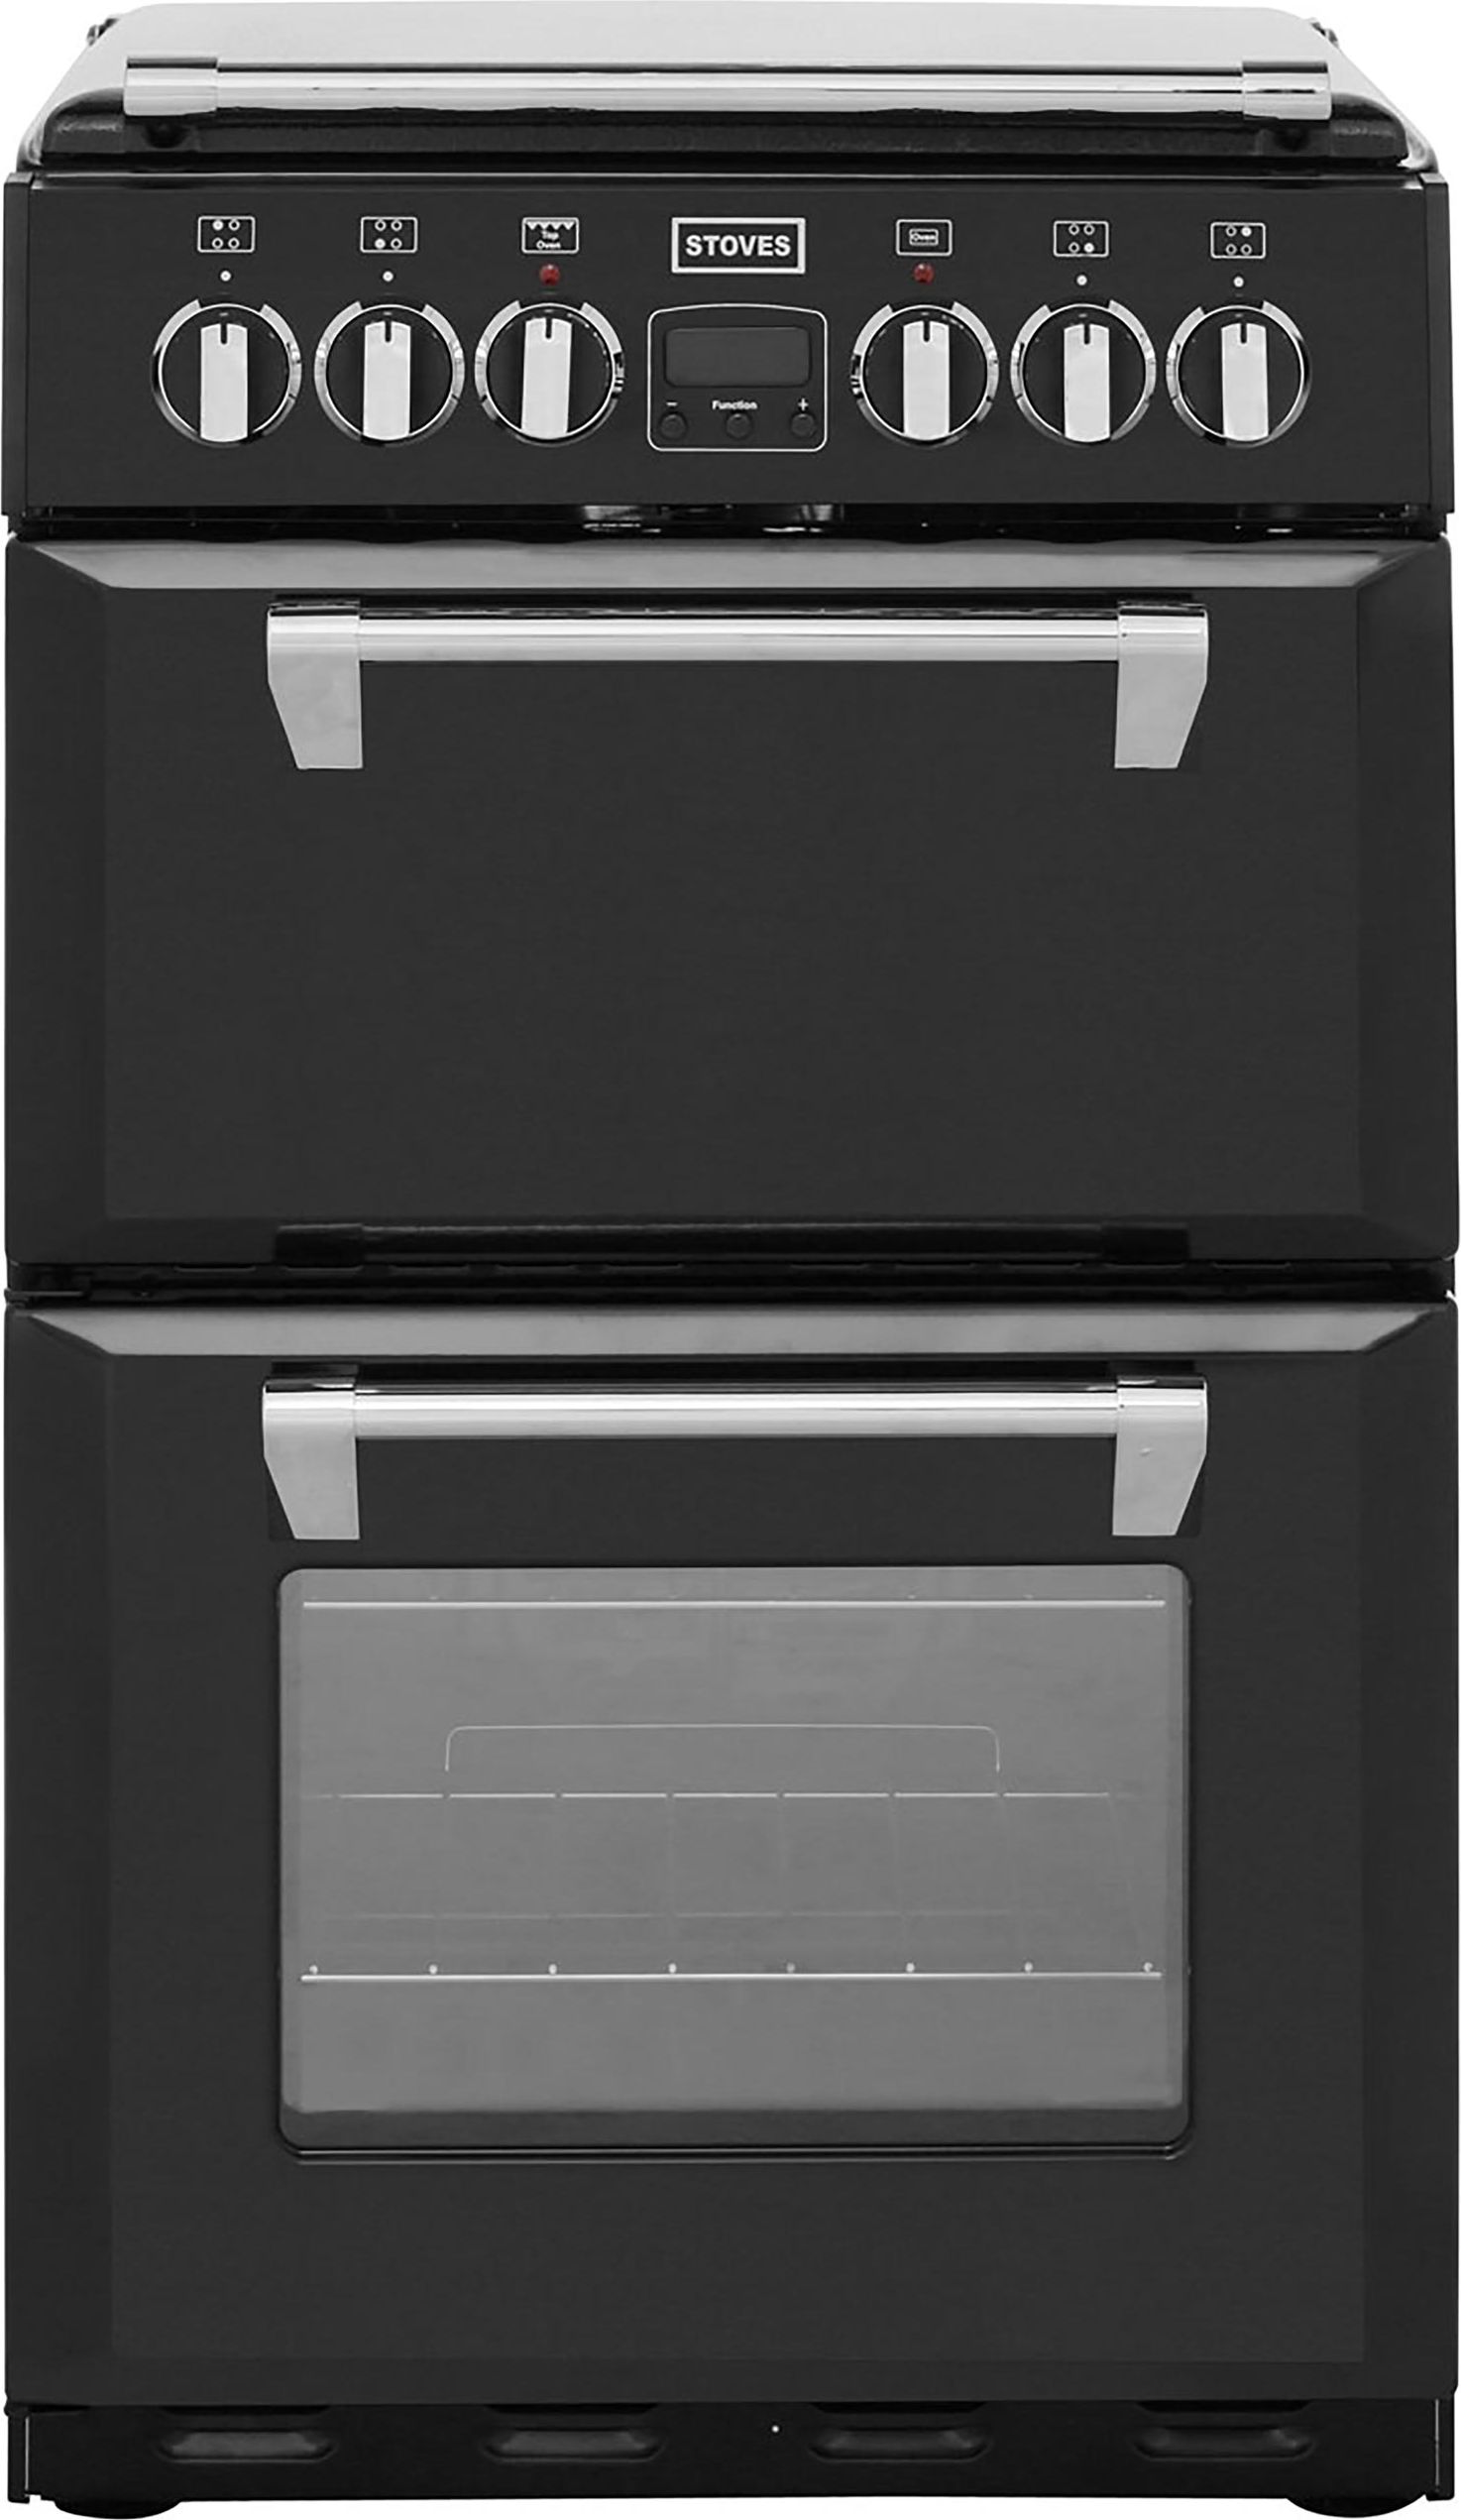 Stoves Mini Range RICHMOND550E 55cm Electric Cooker with Ceramic Hob - Black - A/A Rated, Black